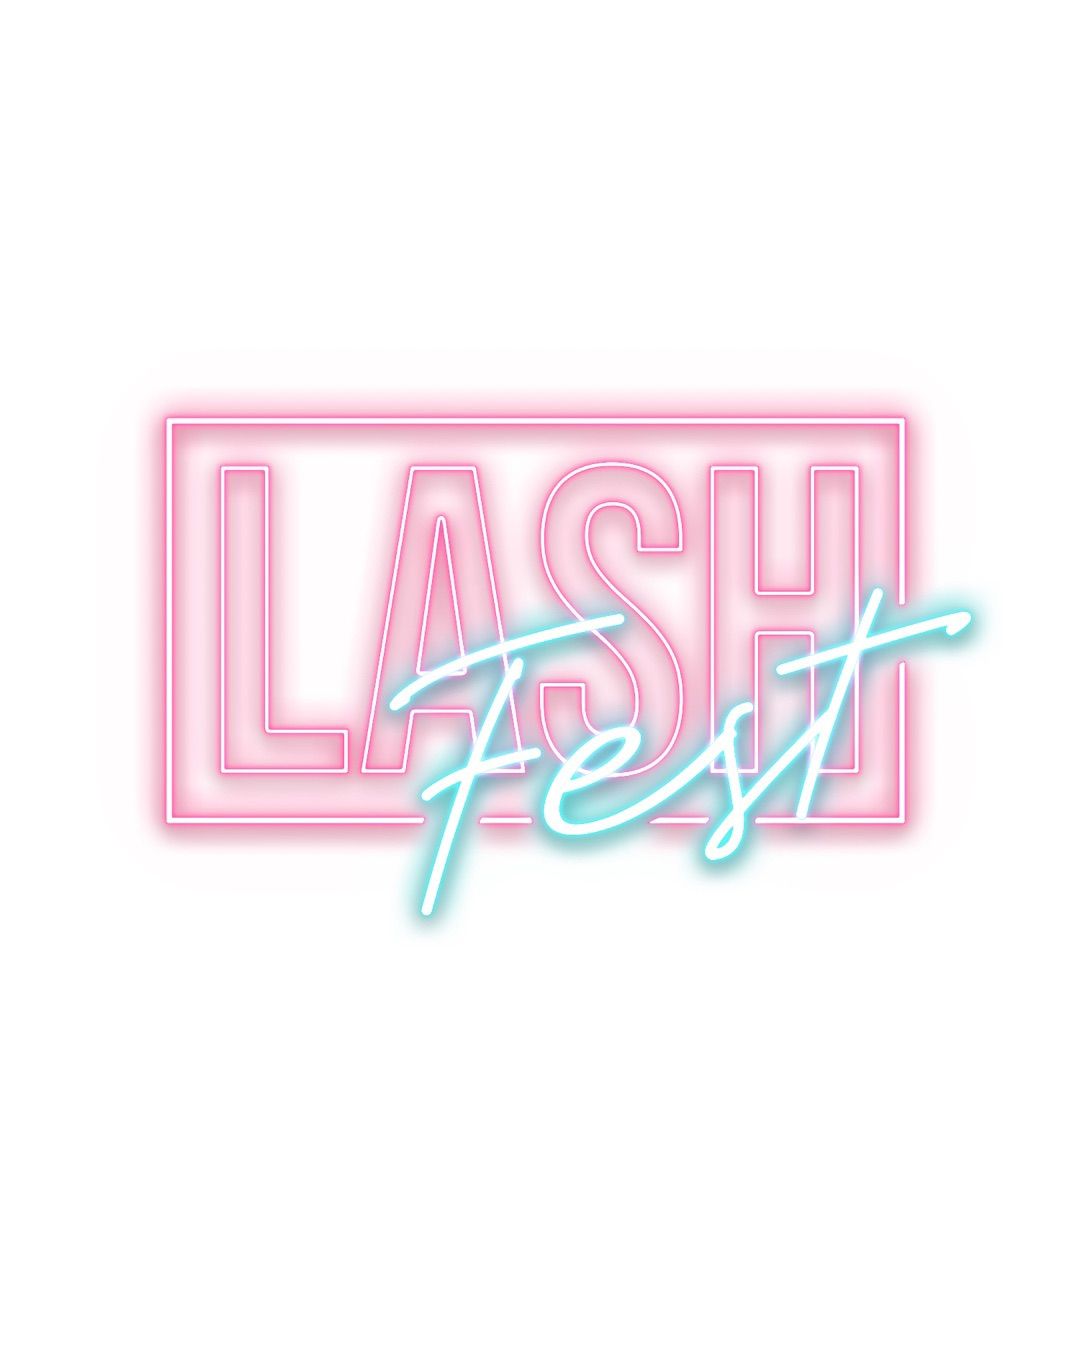 LashFest Dallas 